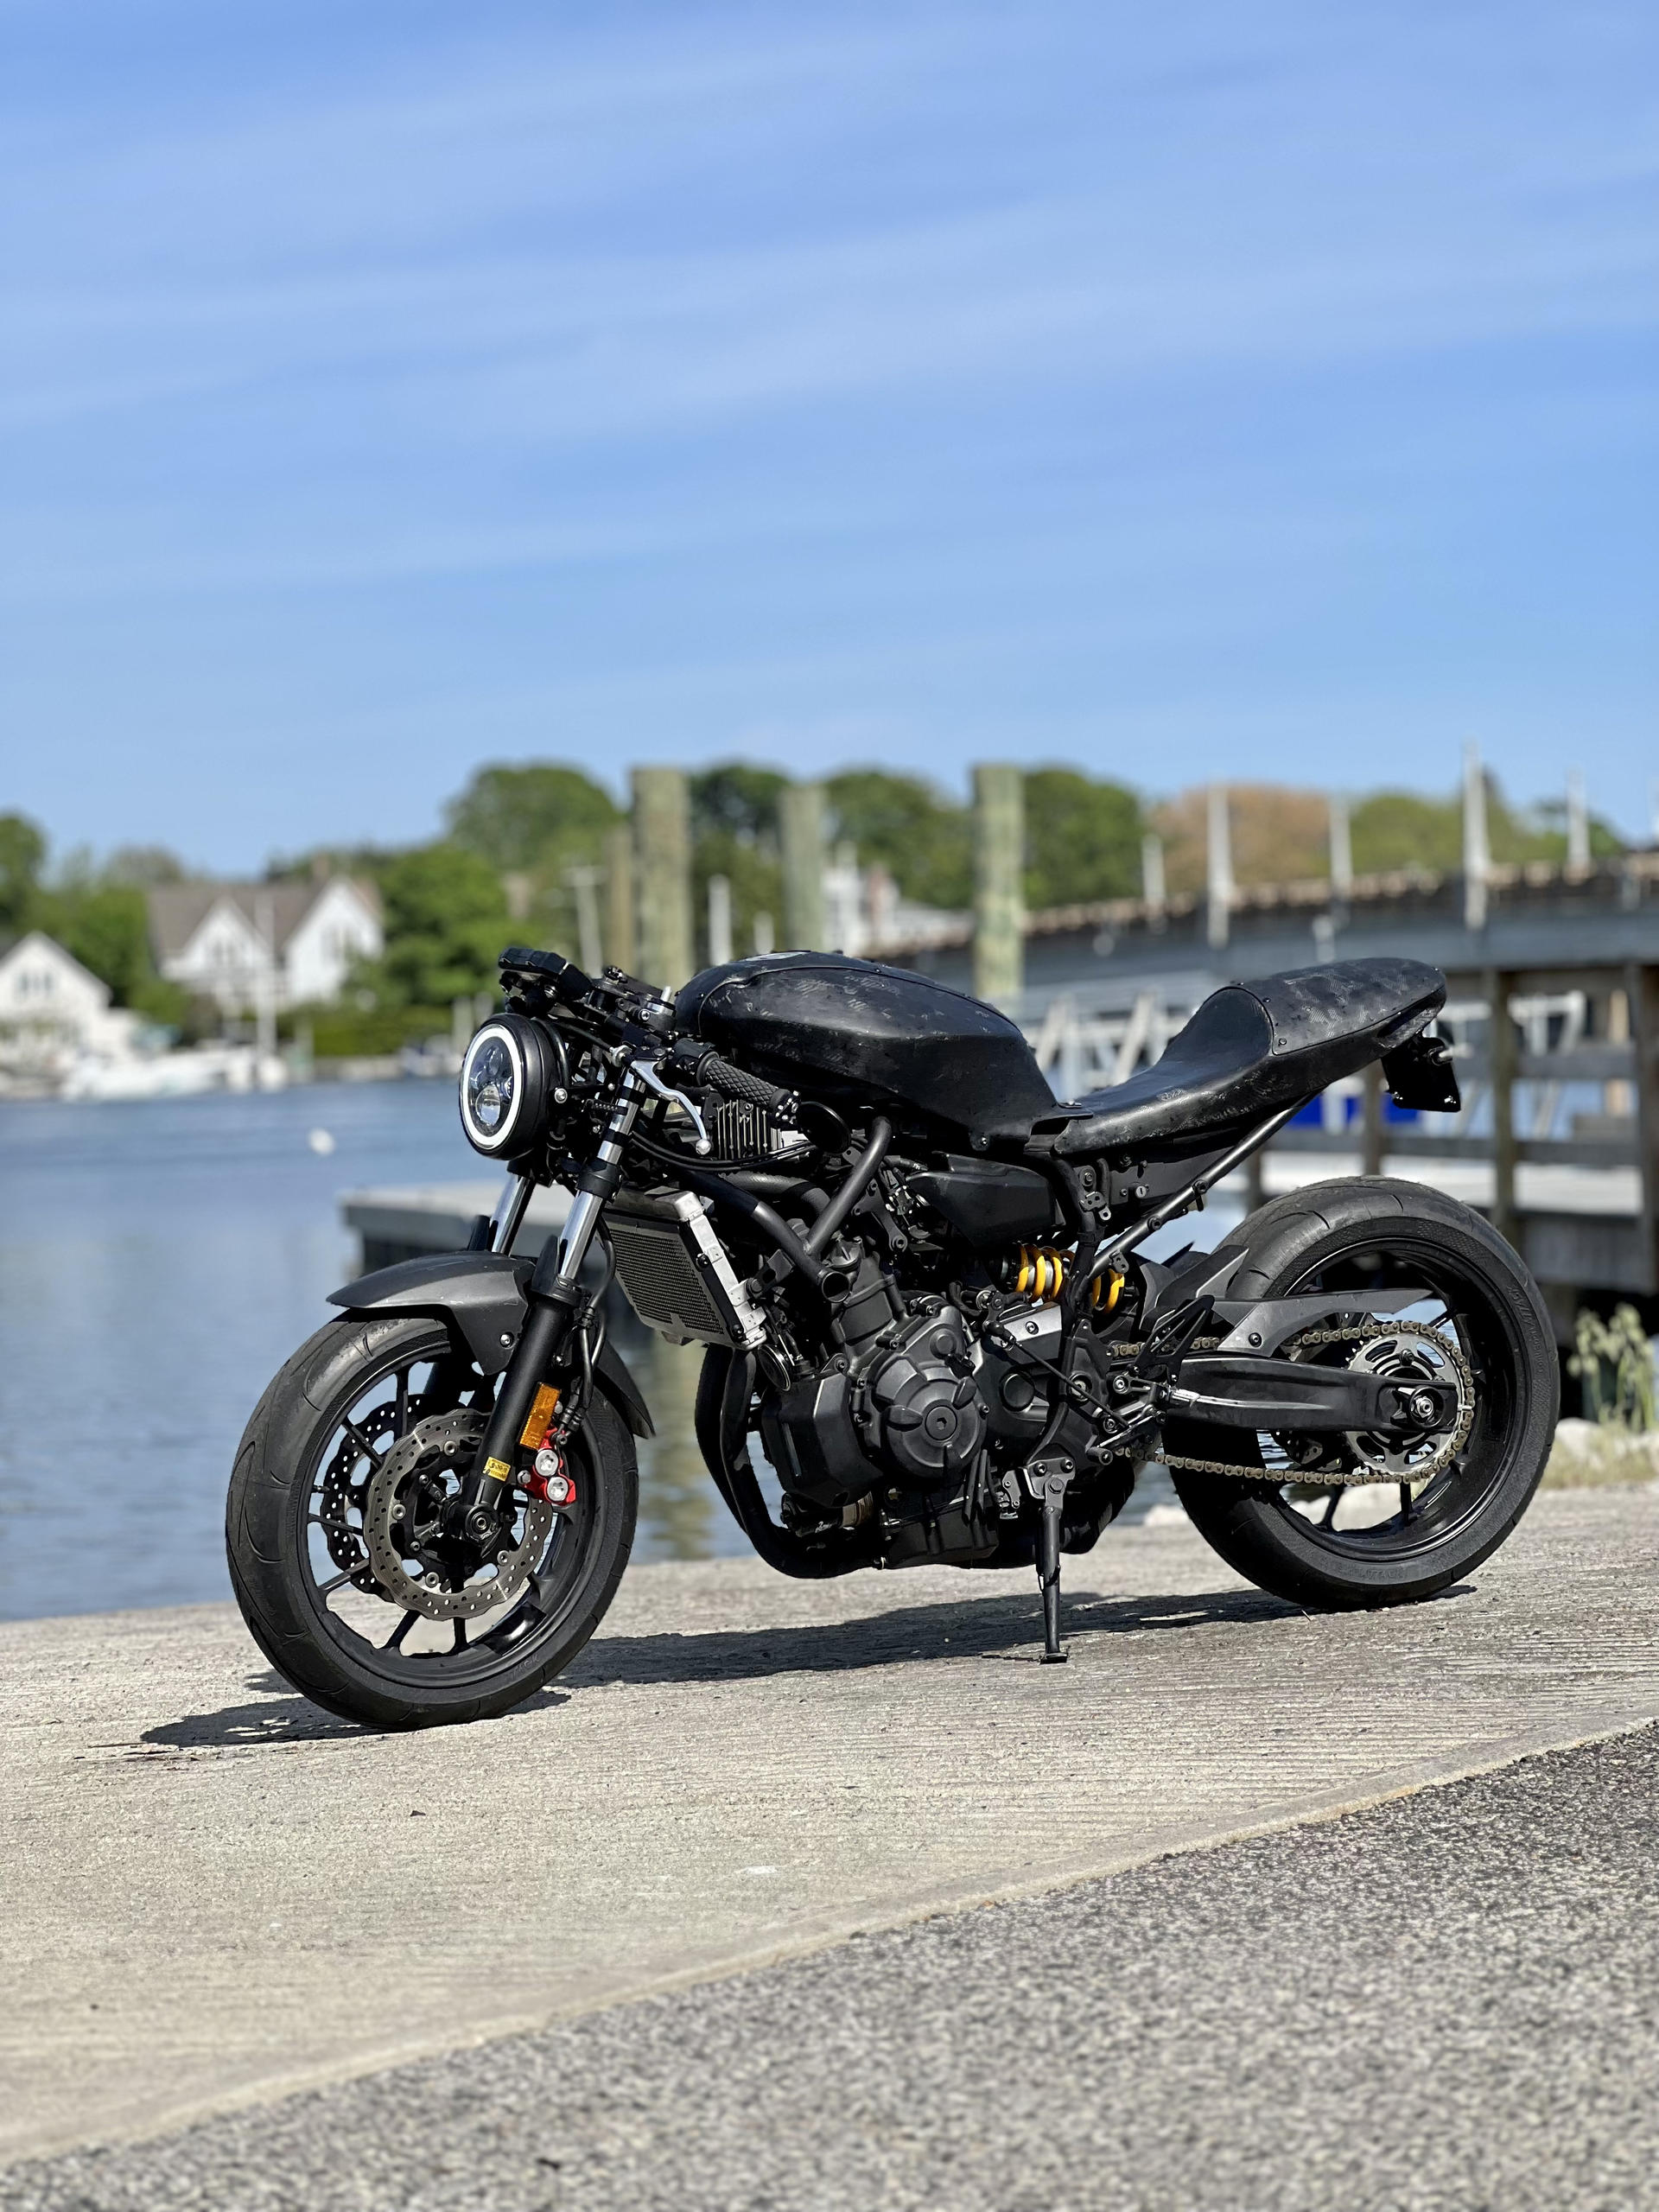 Custom motorcycle at a bridge